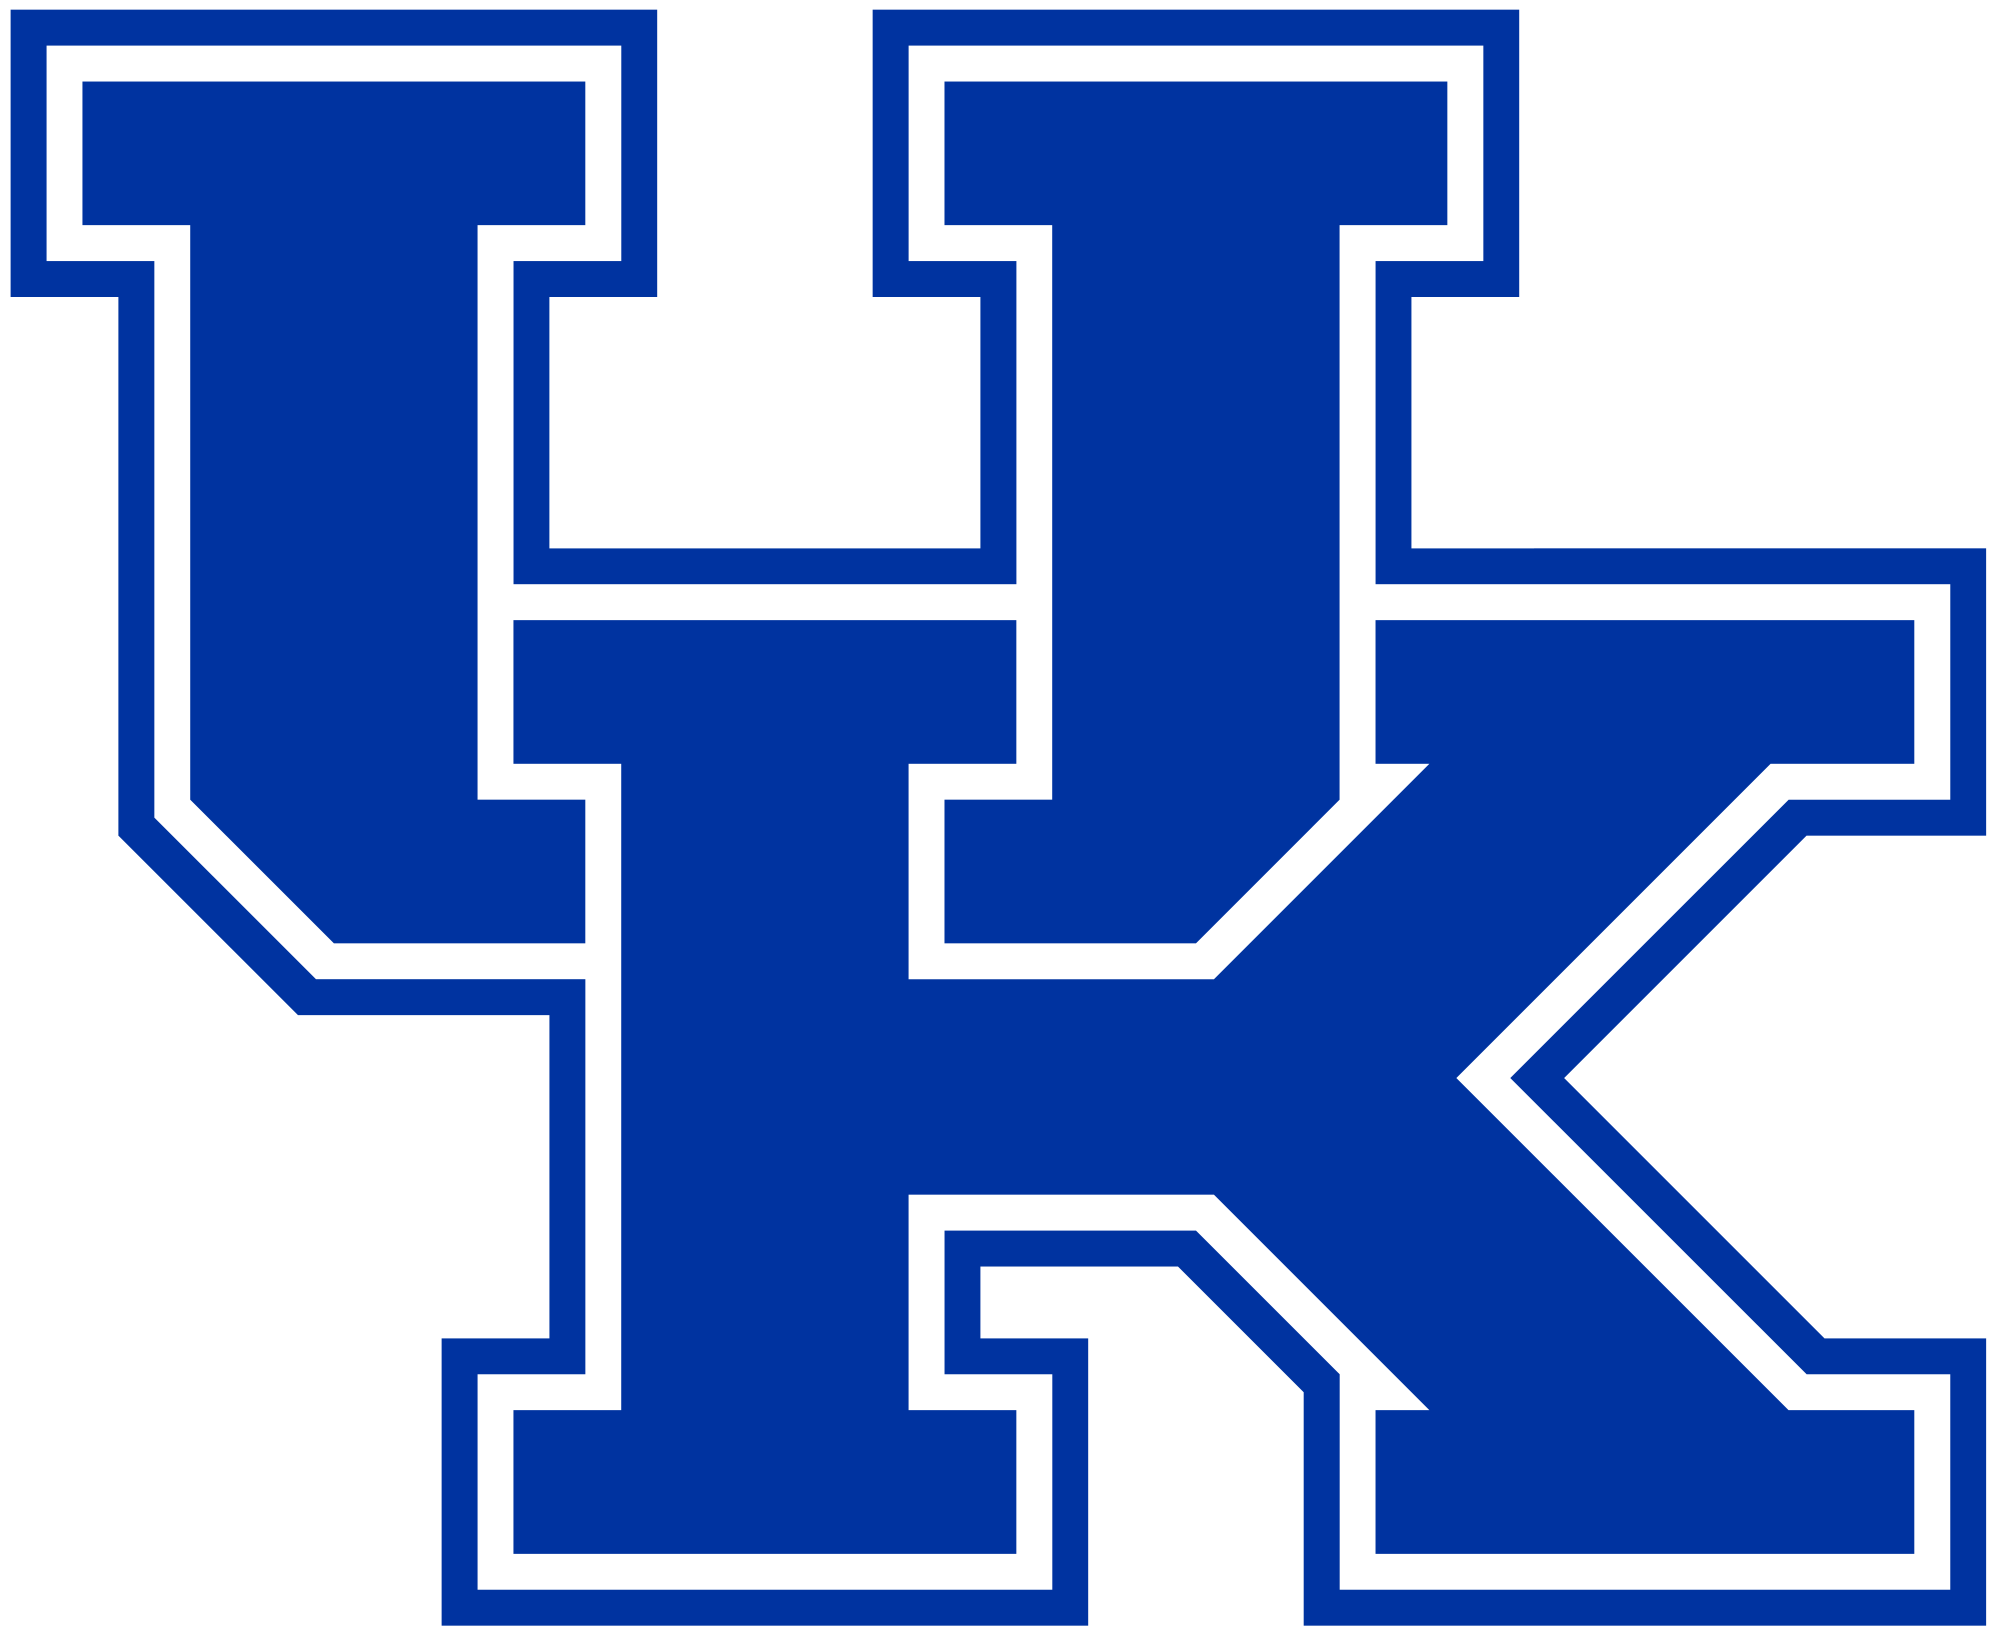 U of K Logo - File:Kentucky Wildcats logo.svg - Wikimedia Commons